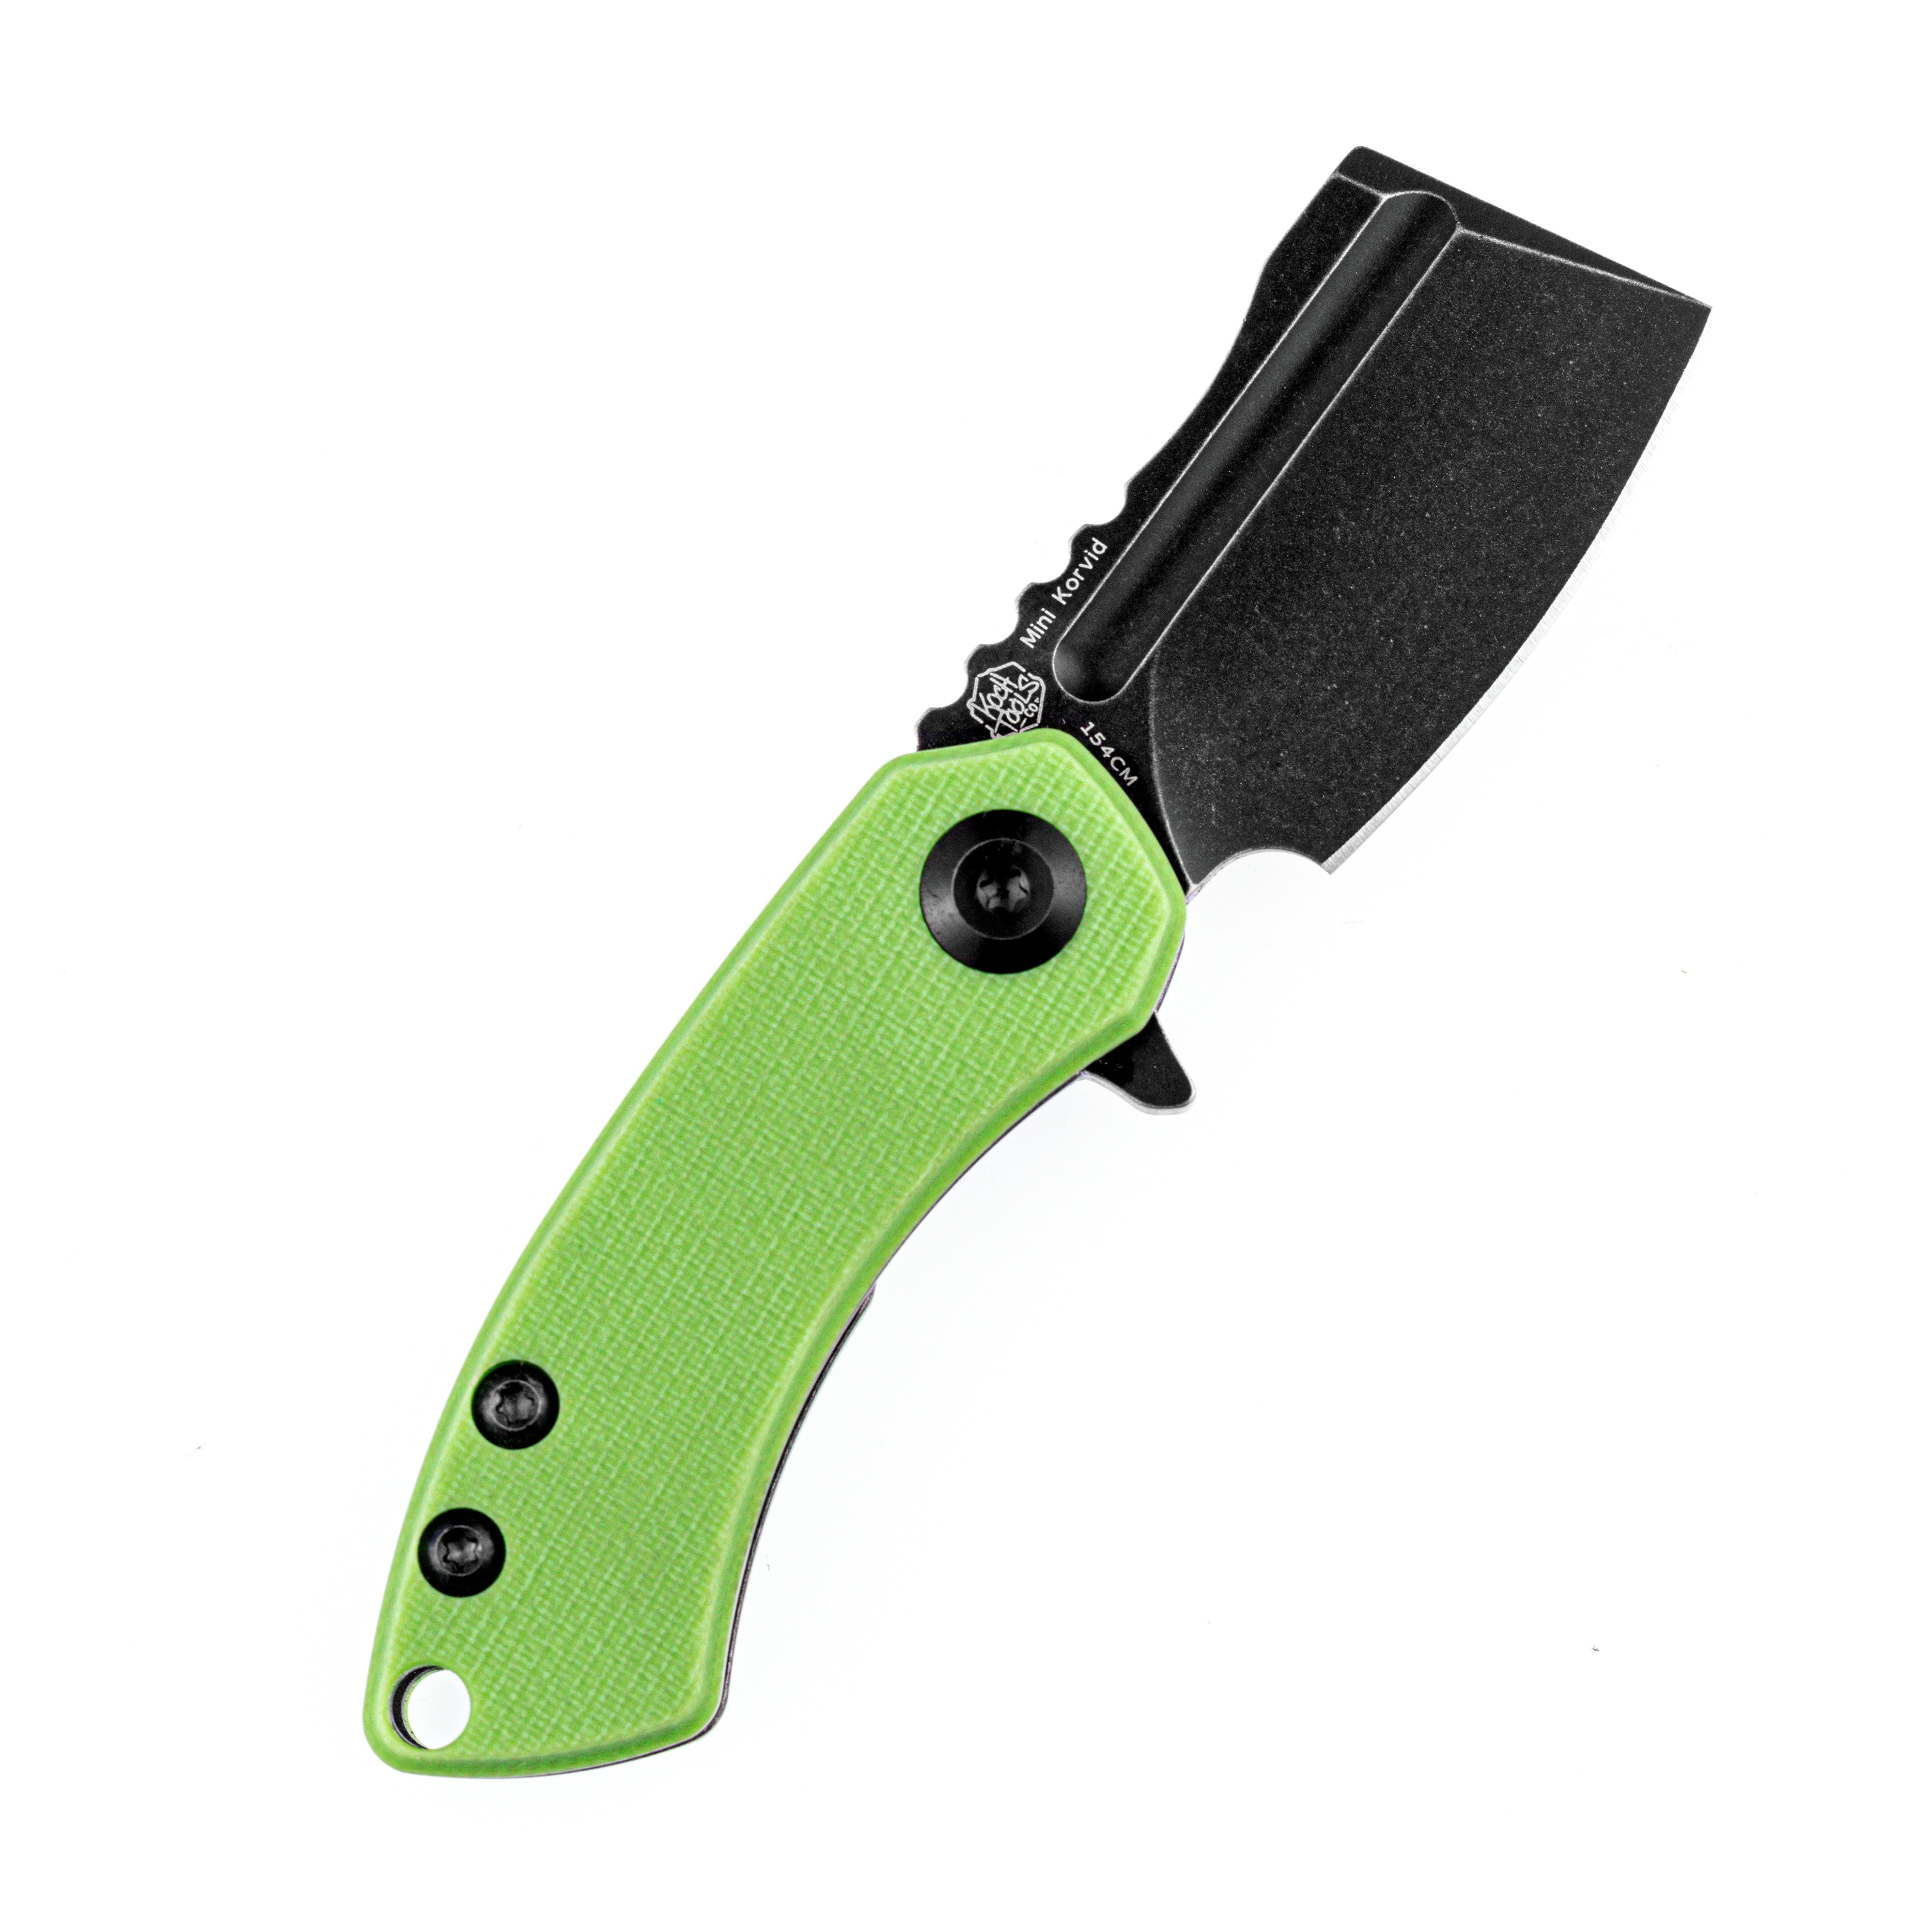 Kansept Knives T3030A8 Mini Korvid 154CM Blade Green G10 Handle Liner Lock Edc Knives